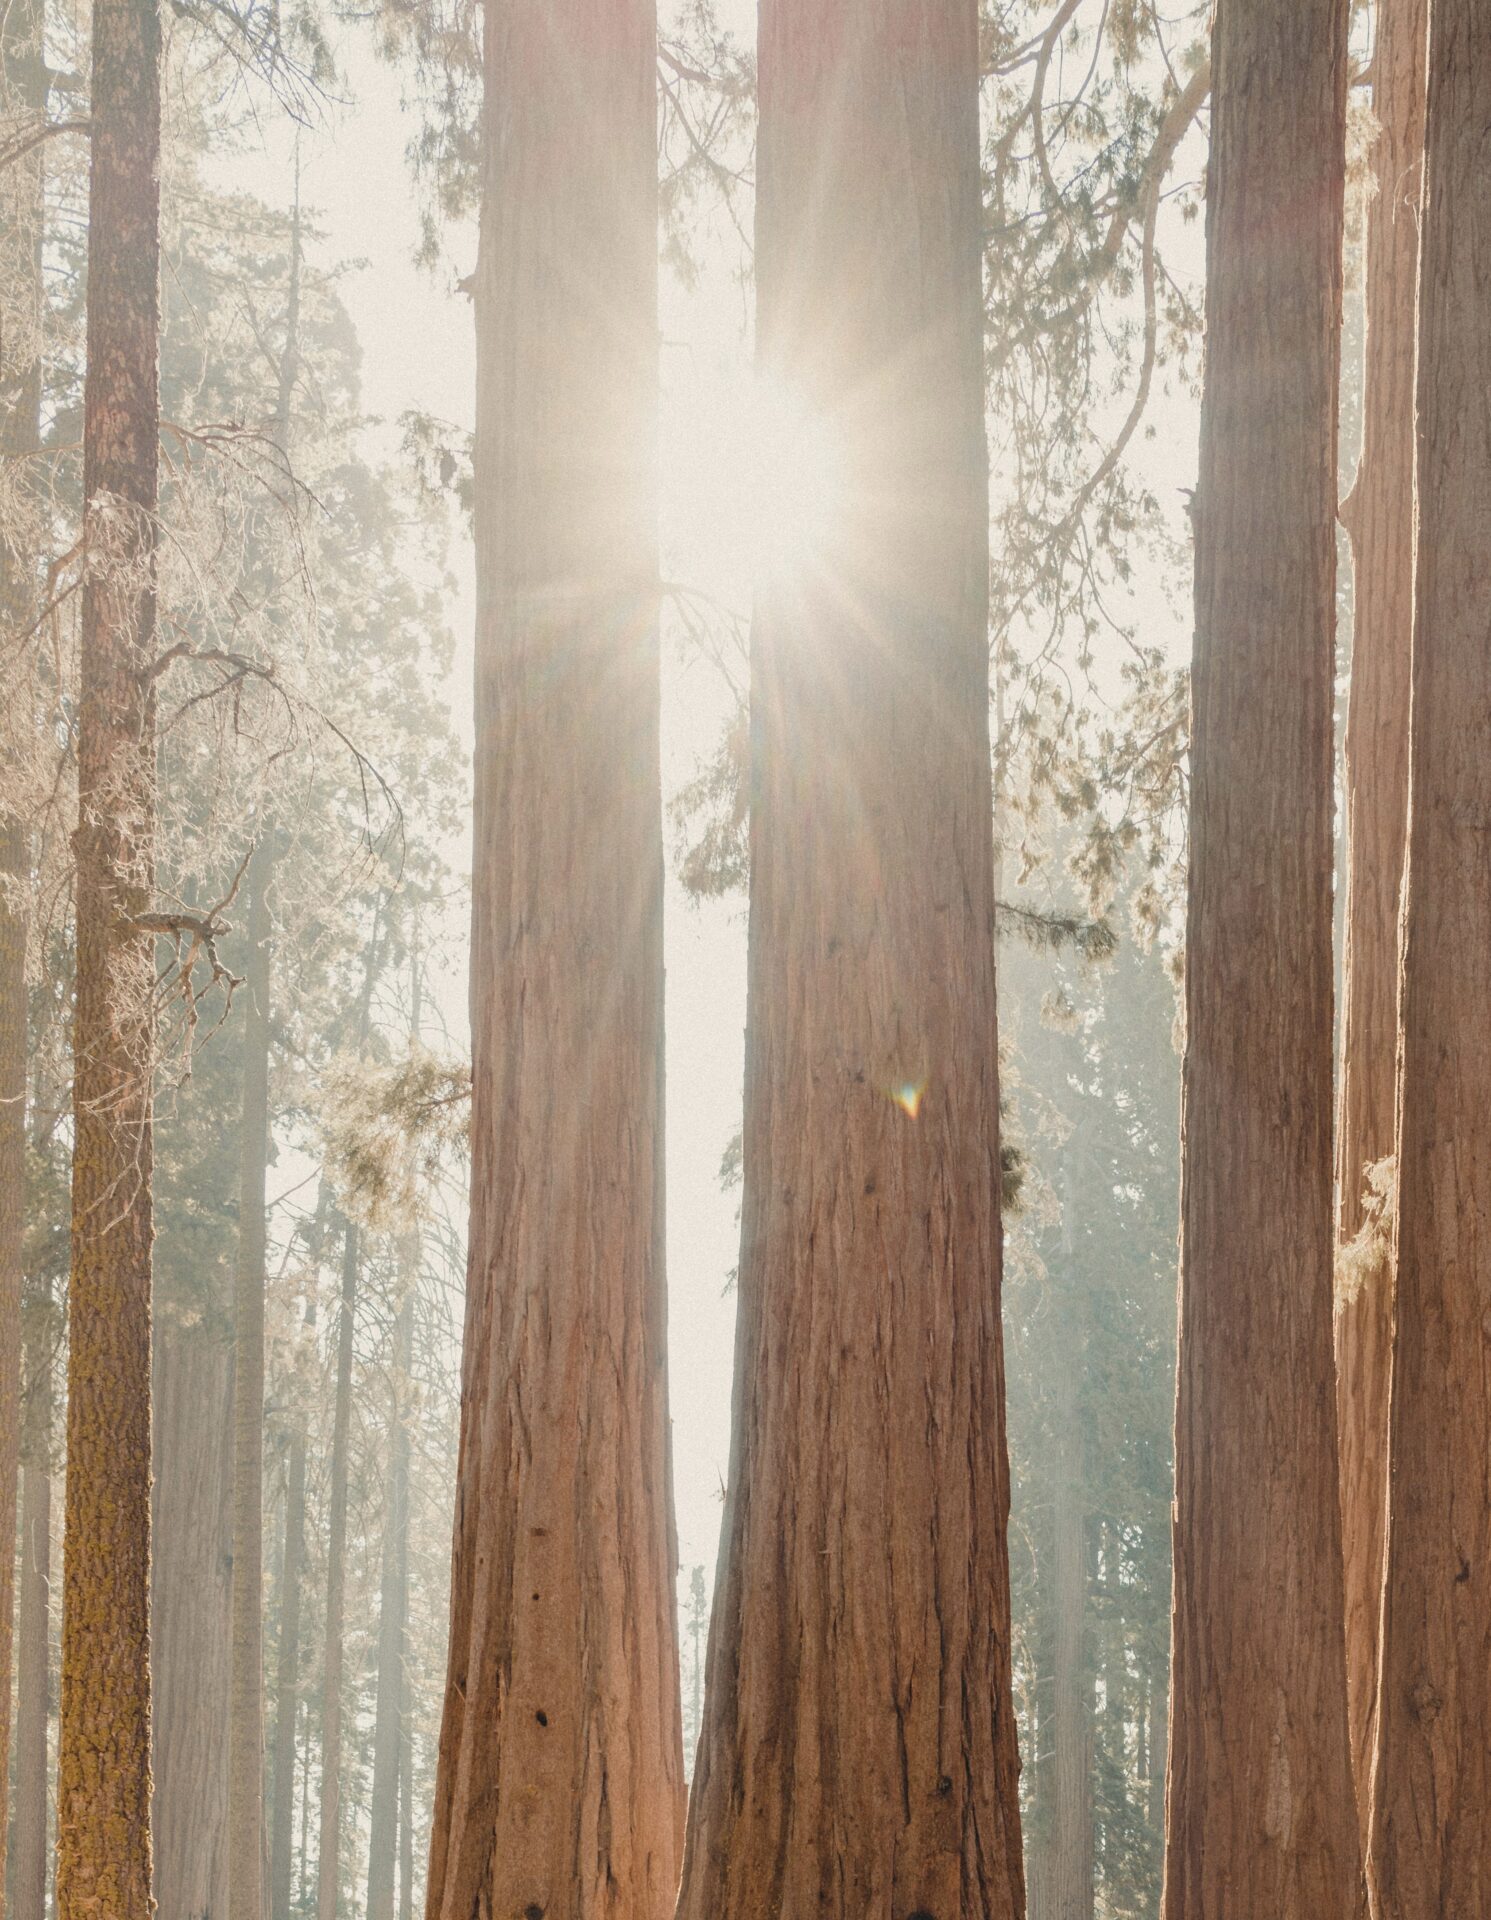 Sequoia trees in the sunlight